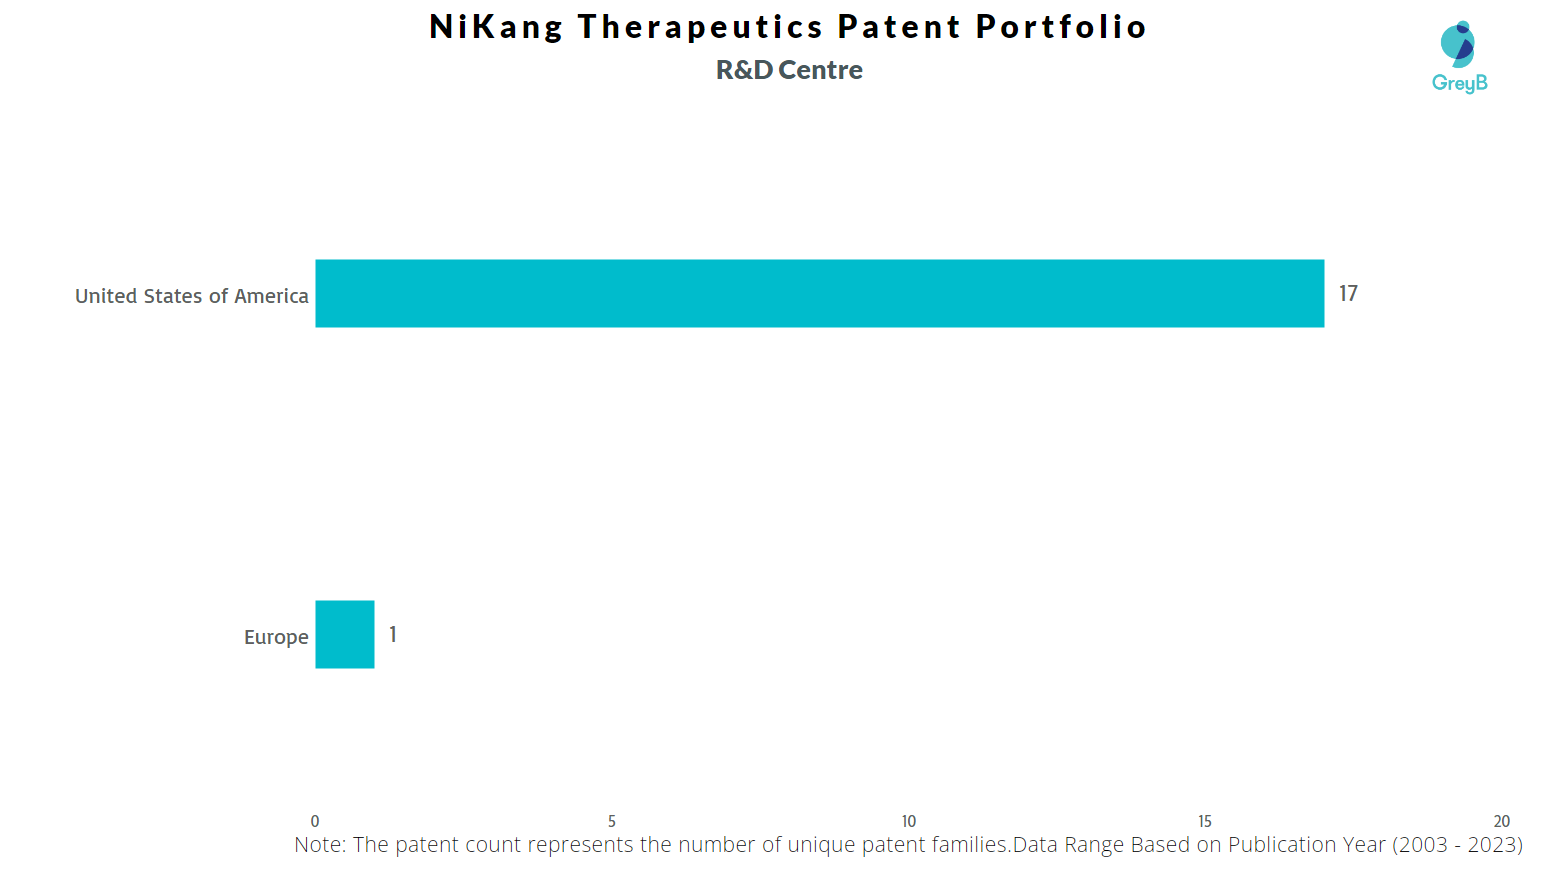 R&D Centres of NiKang Therapeutics